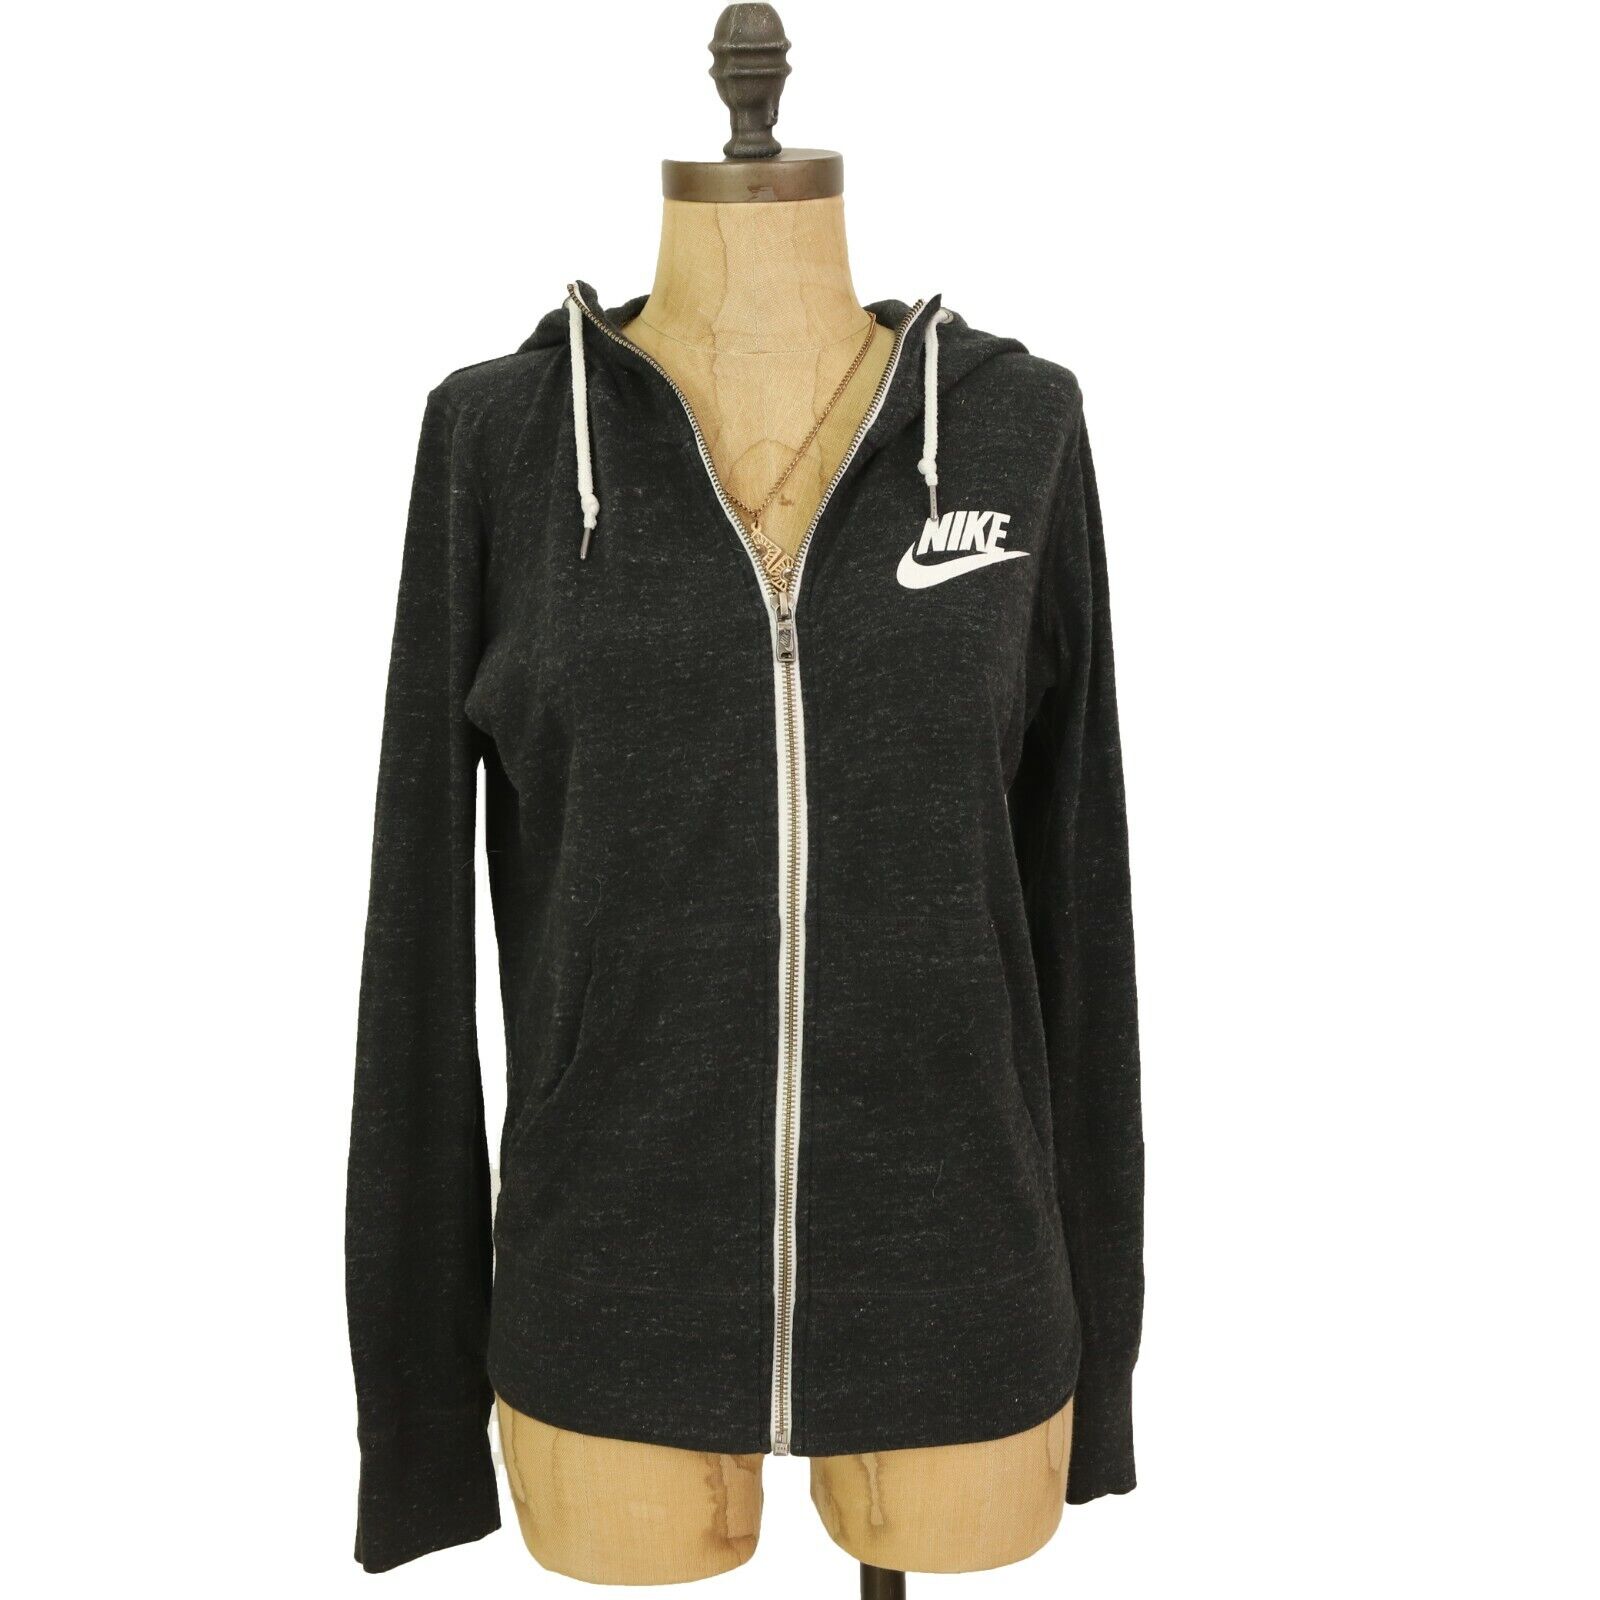 Nike Zip Up Award Logo Hoodie Sweatshirt New color Top Size EUC Gray Cotton Blend B88 M Organic